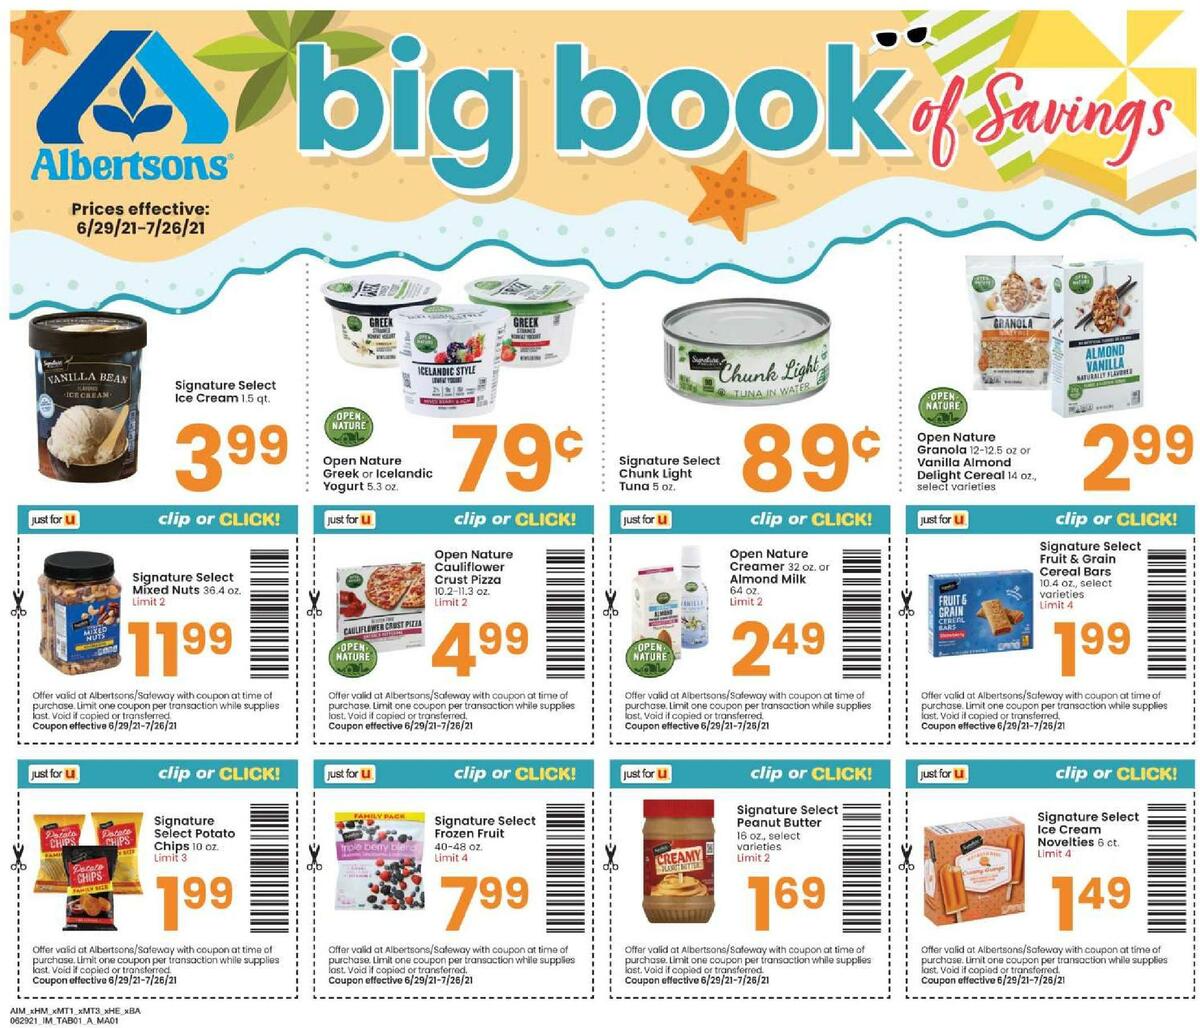 Albertsons Big Book of Savings Weekly Ad from June 29